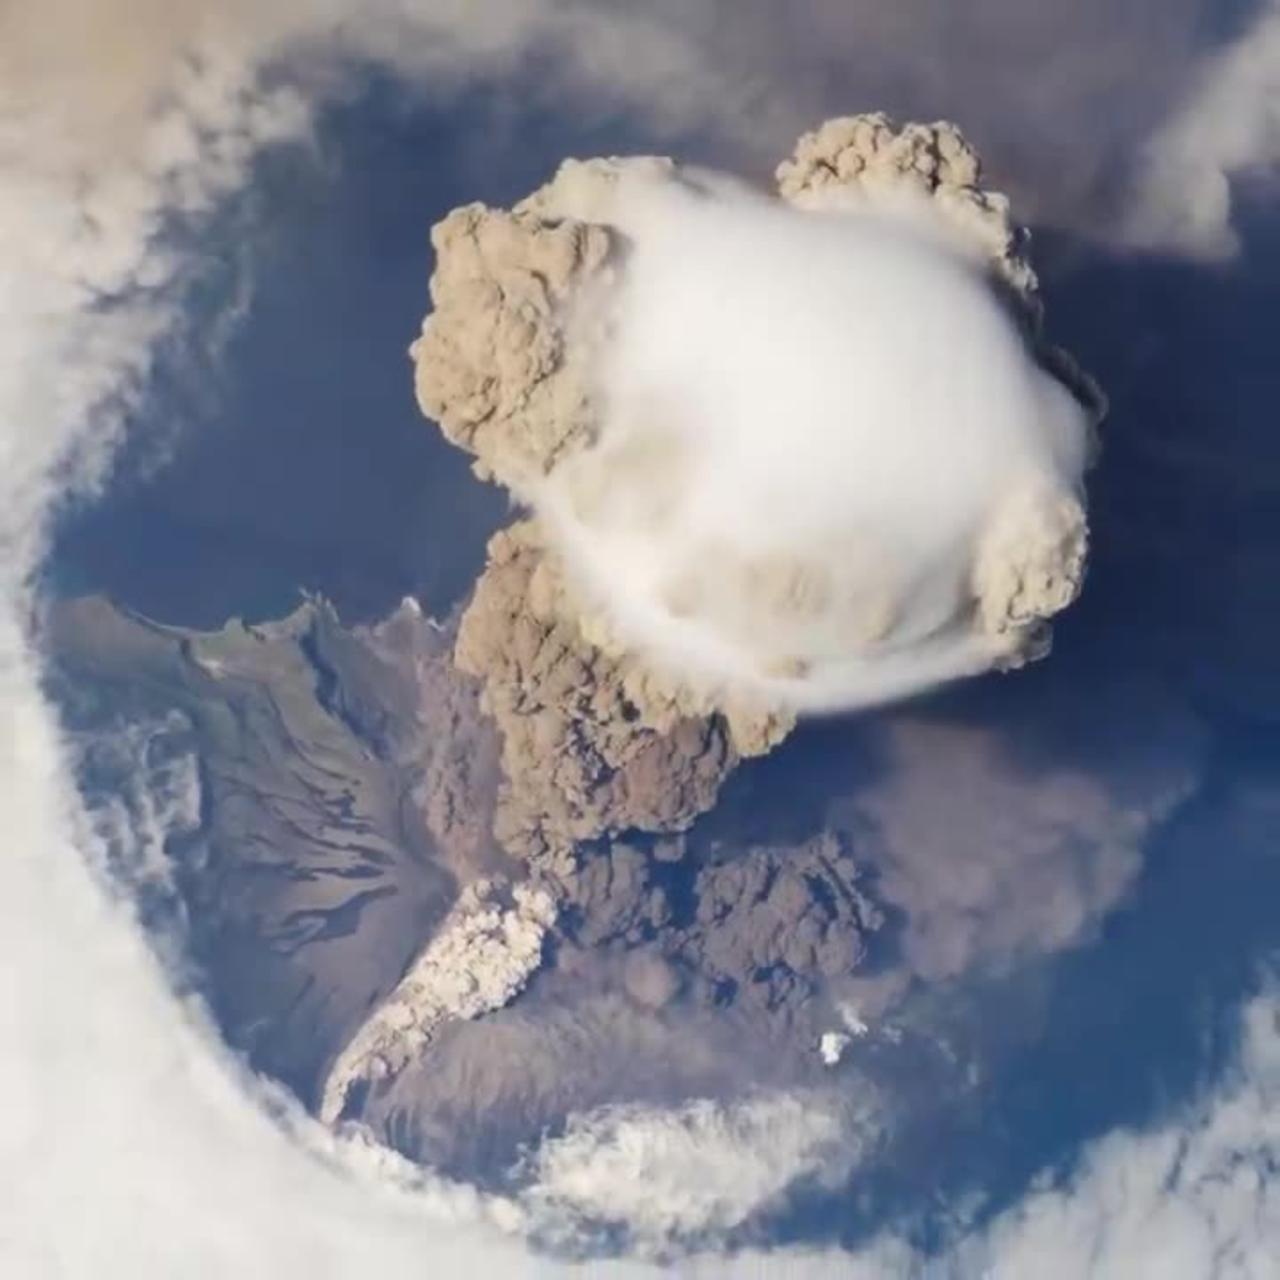 NASA - Sarychev Volcano Eruption from the International Space Station